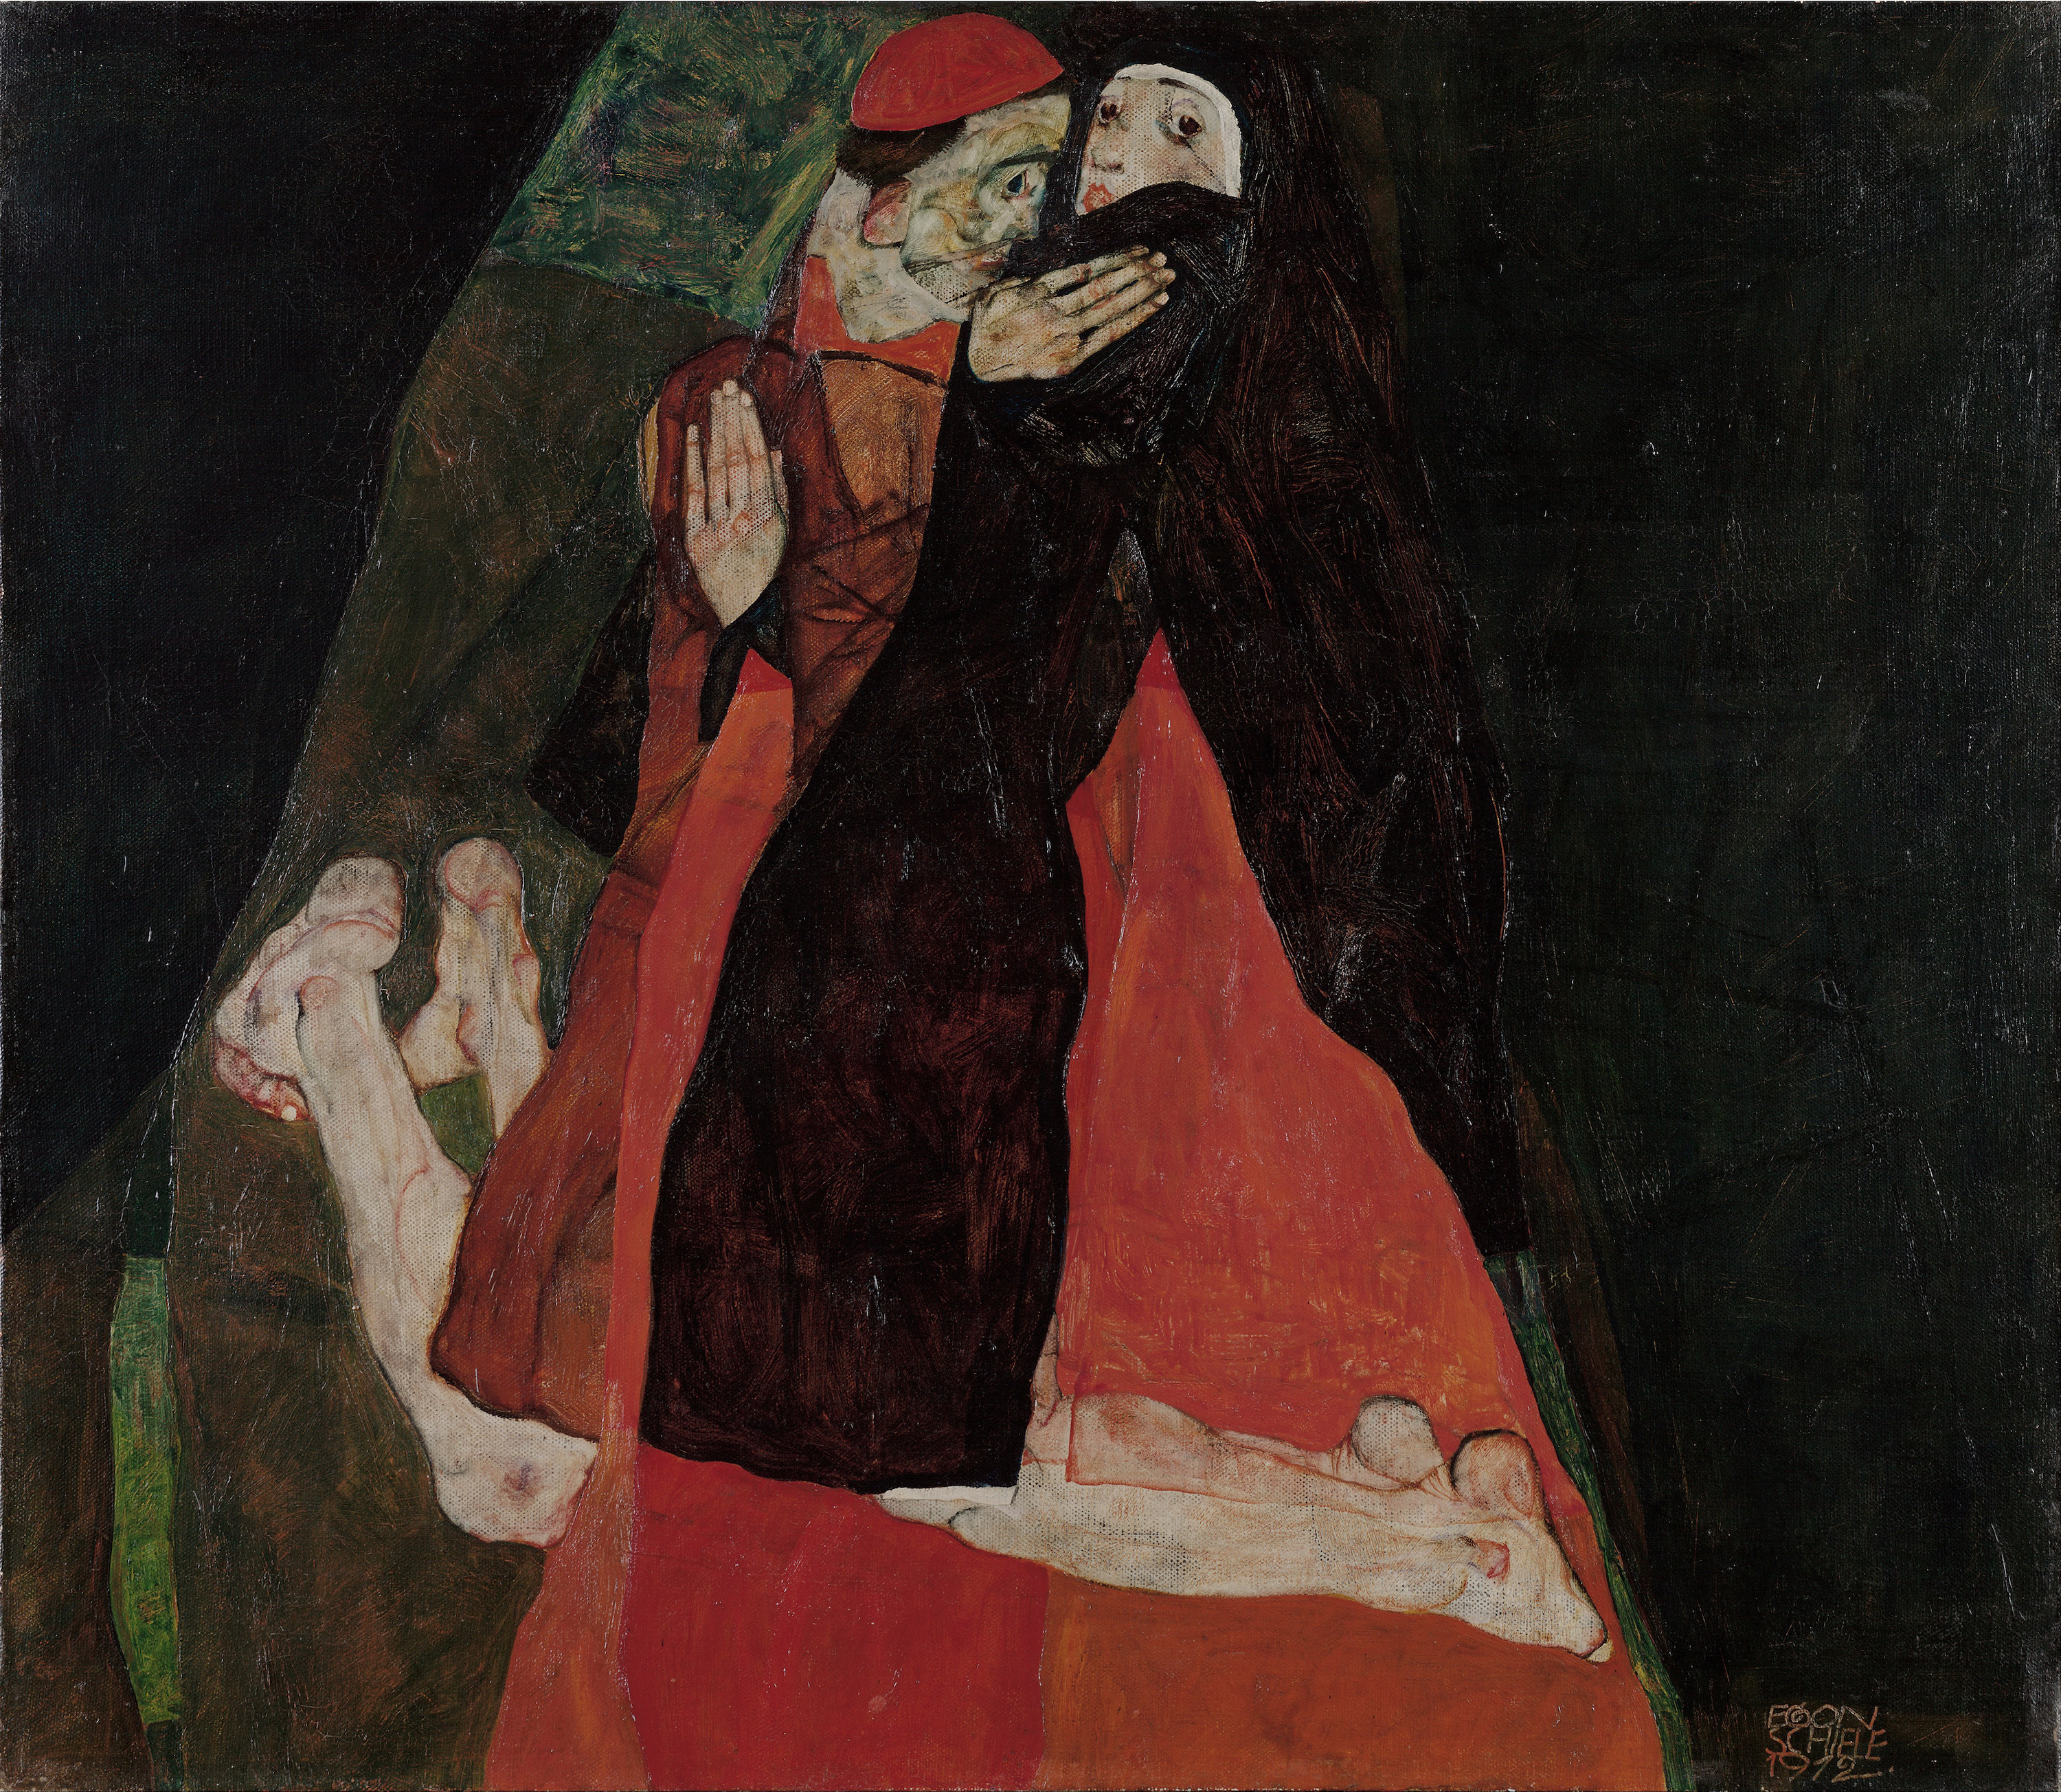 Cardinal and Nun (Caress) by Egon Schiele - 1912 - 80.5 x 70 cm Leopold Museum